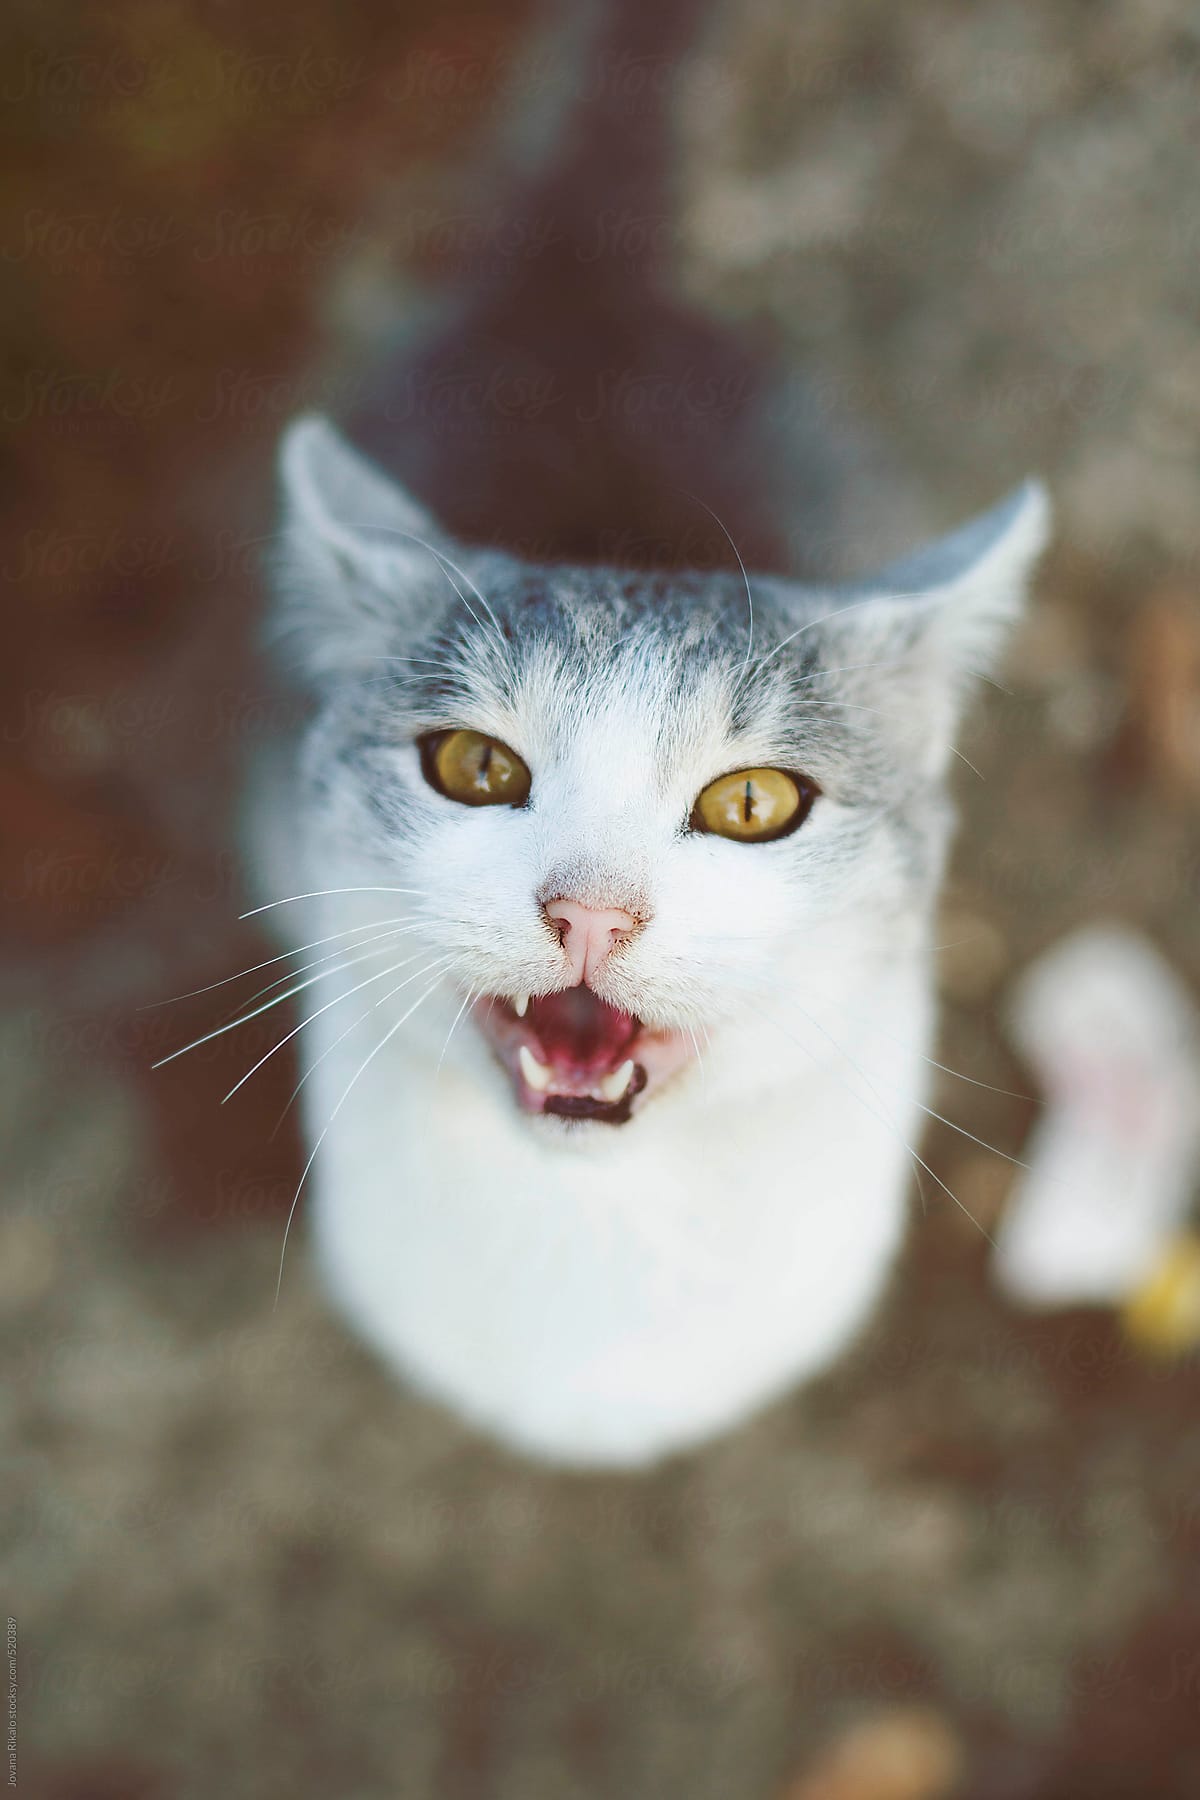 Cat Meowing And Looking At Camera by Jovana Rikalo